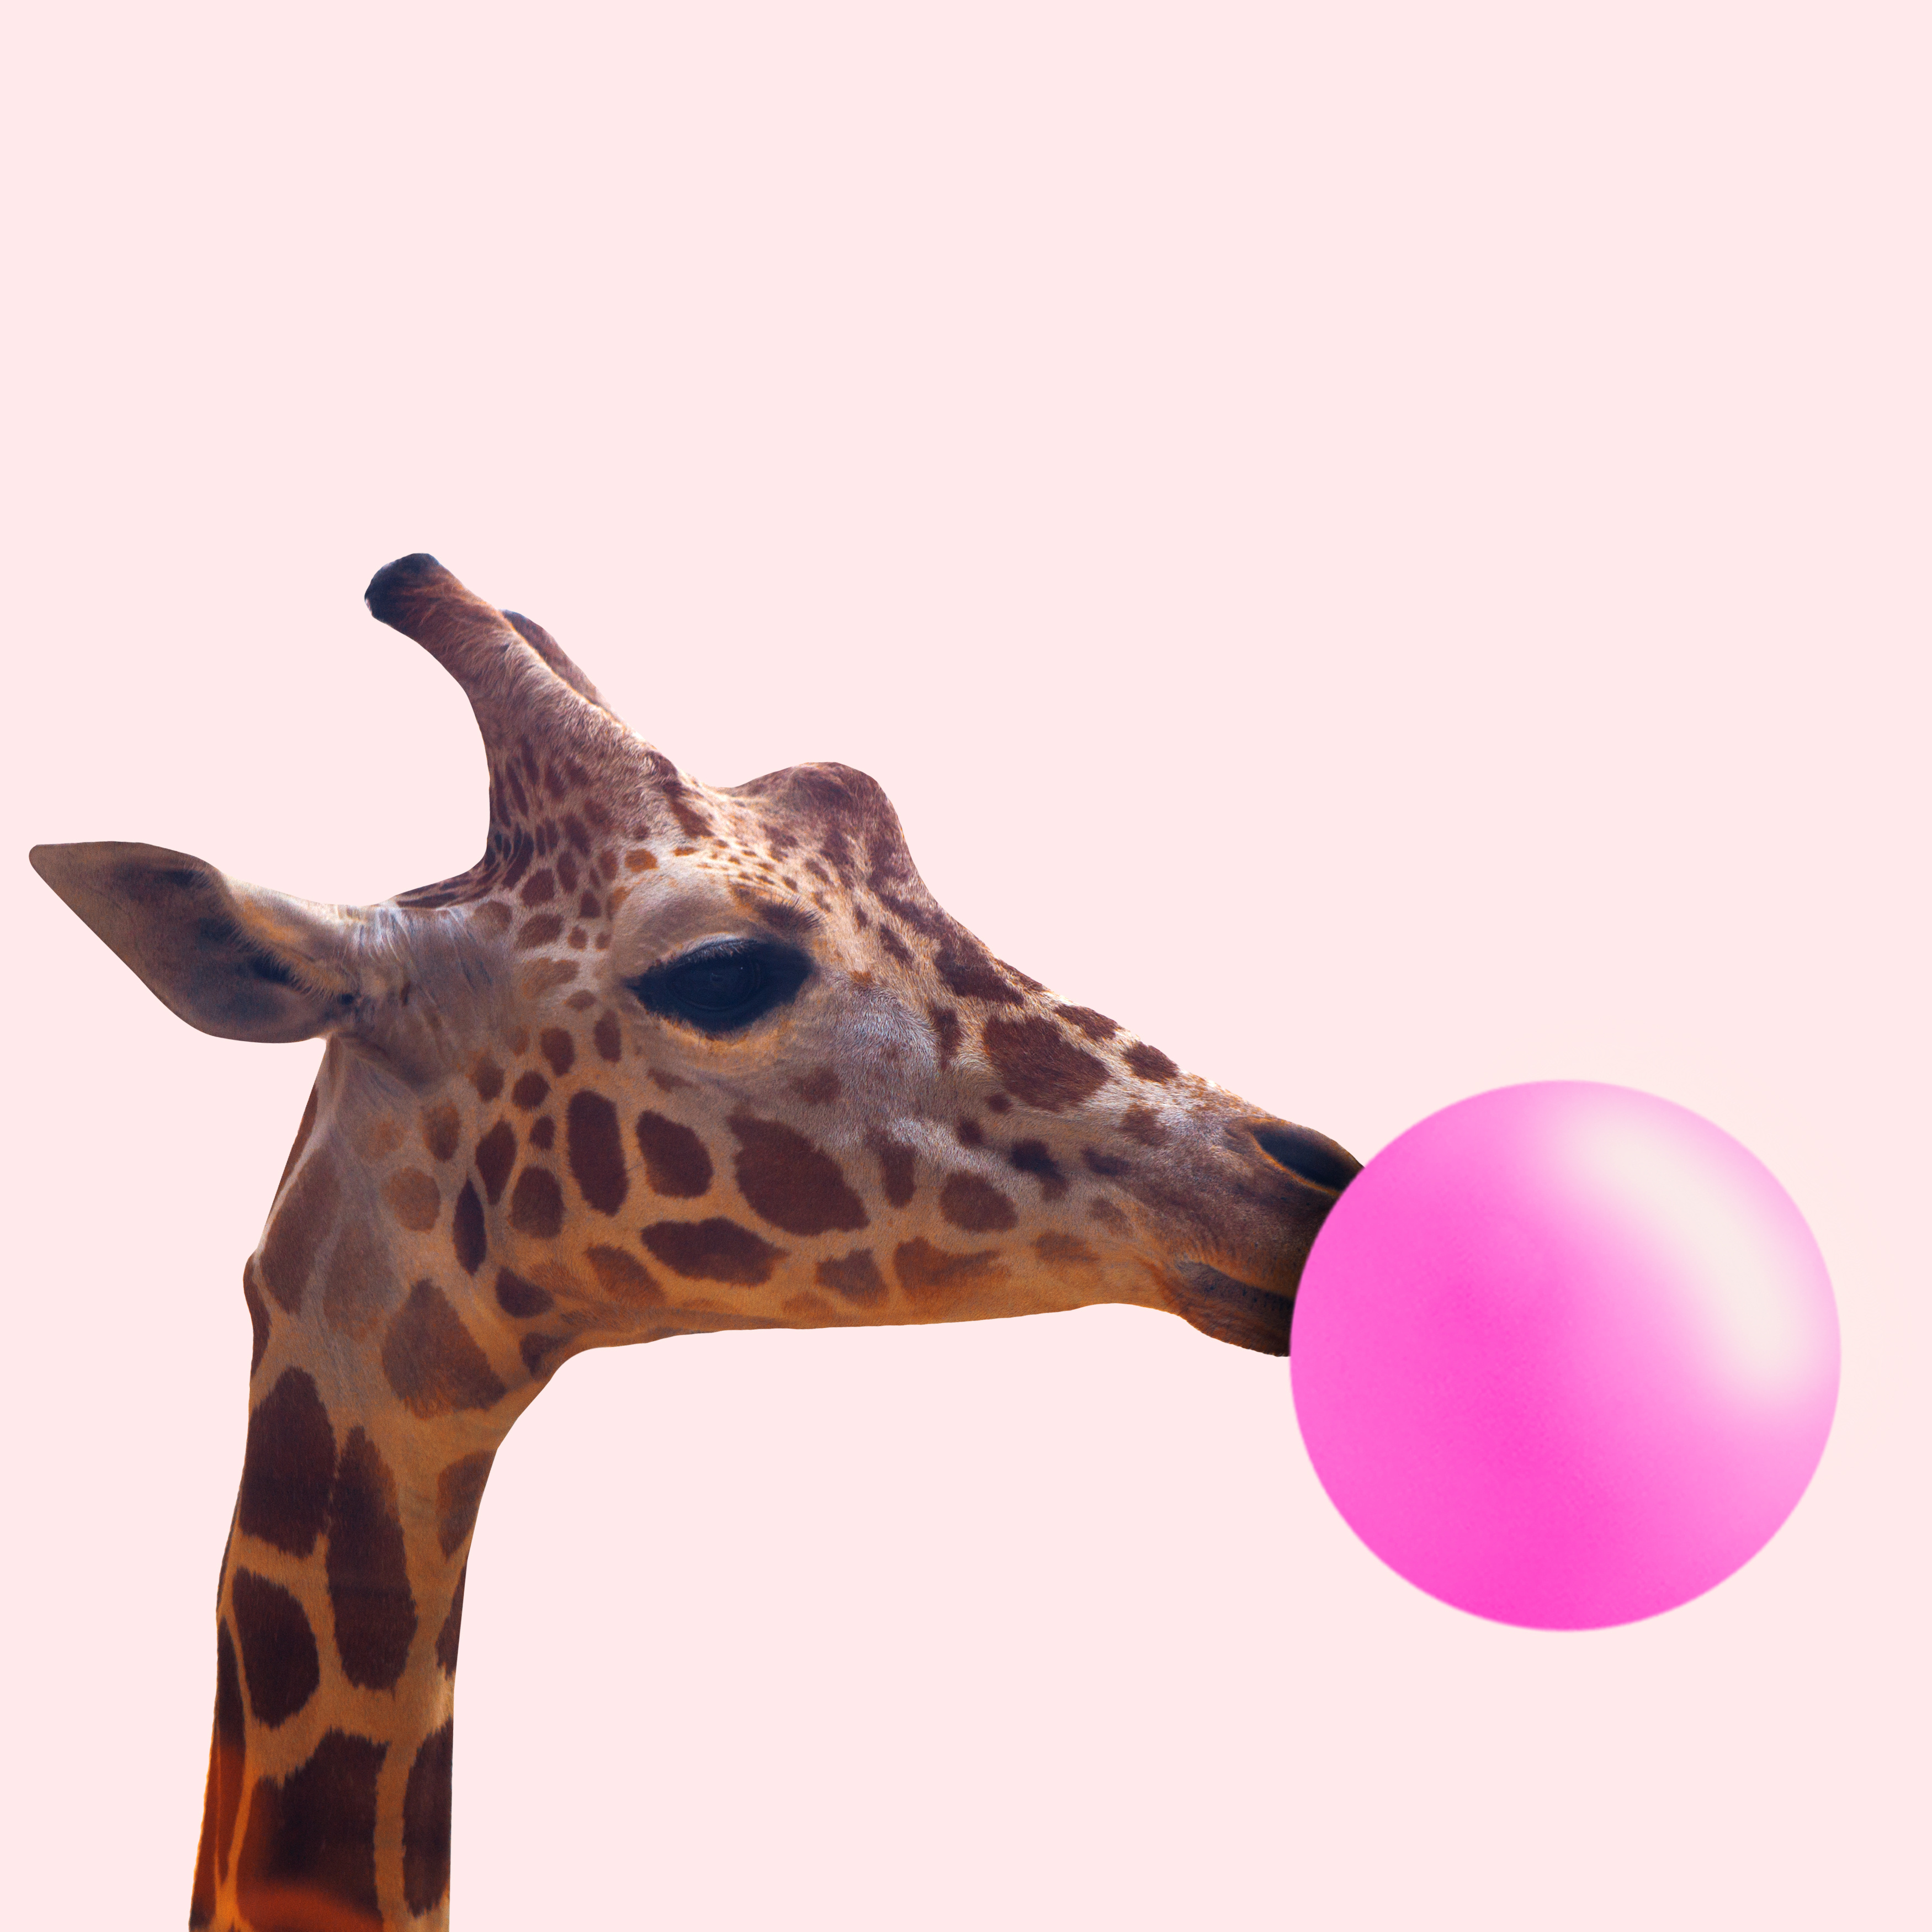 Creative giraffe. With bubble